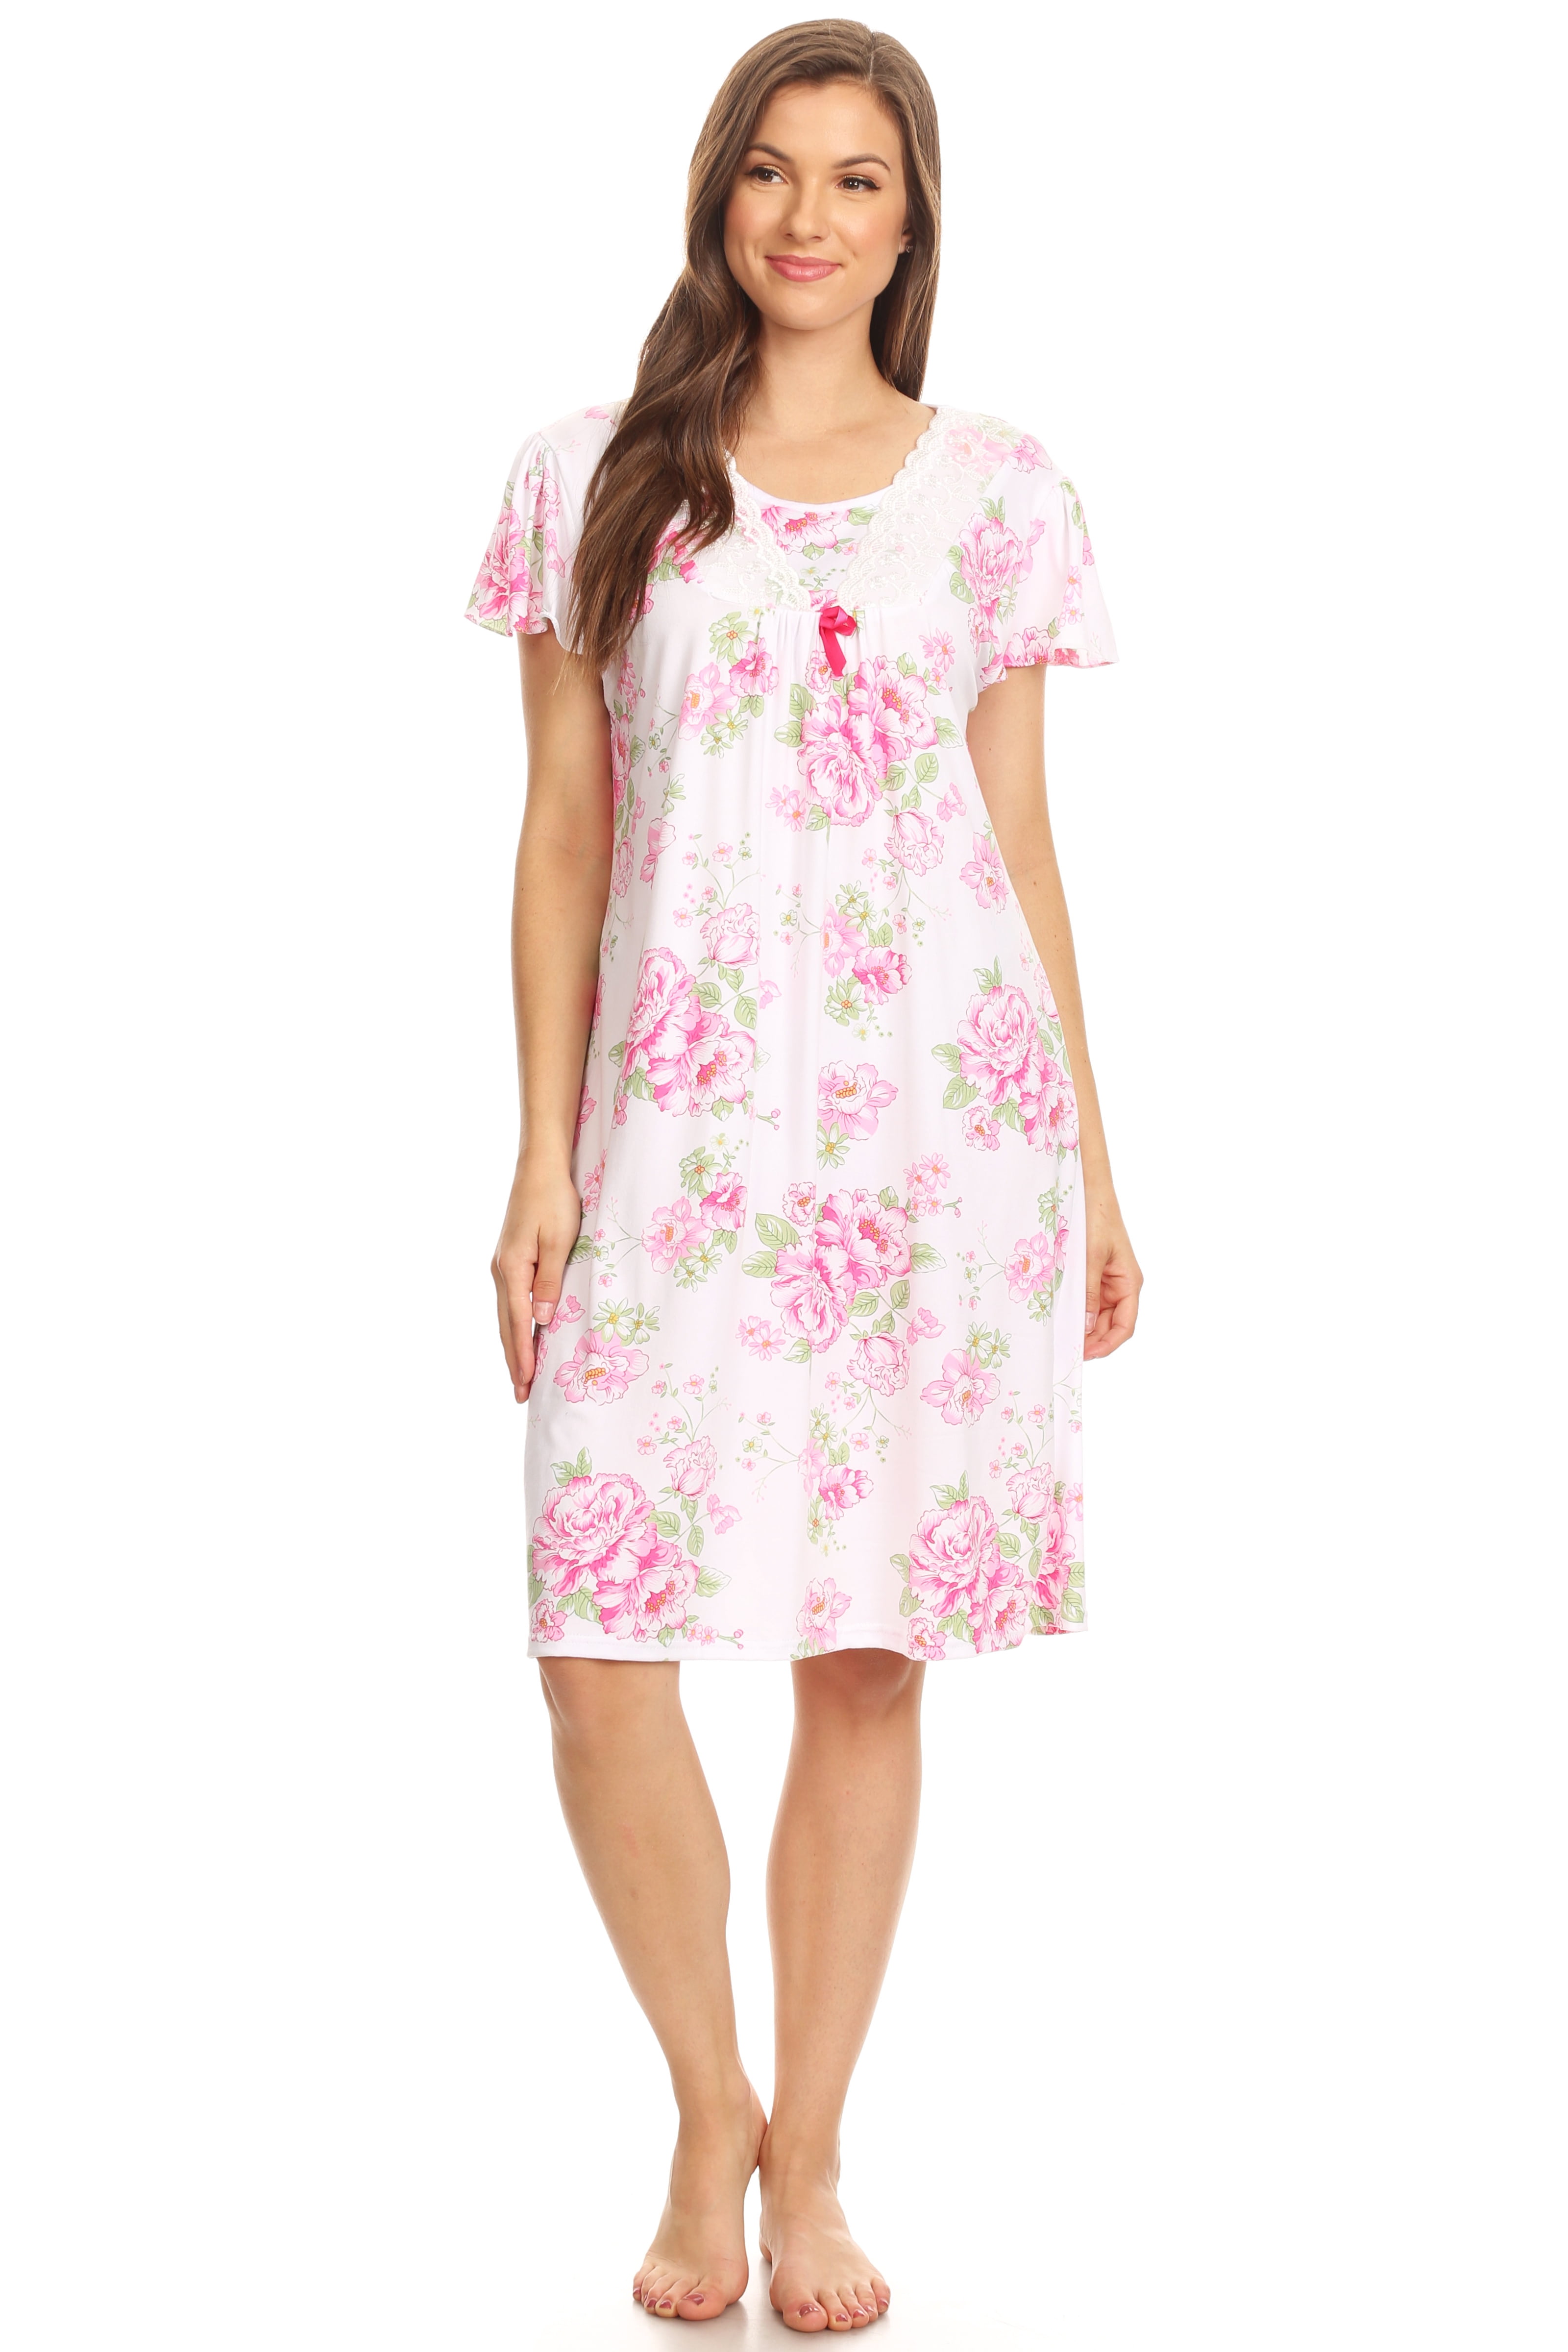 812 Womens Nightgown Sleepwear Pajamas Woman Short Sleeve Sleep Dress Nightshirt Pink 1X